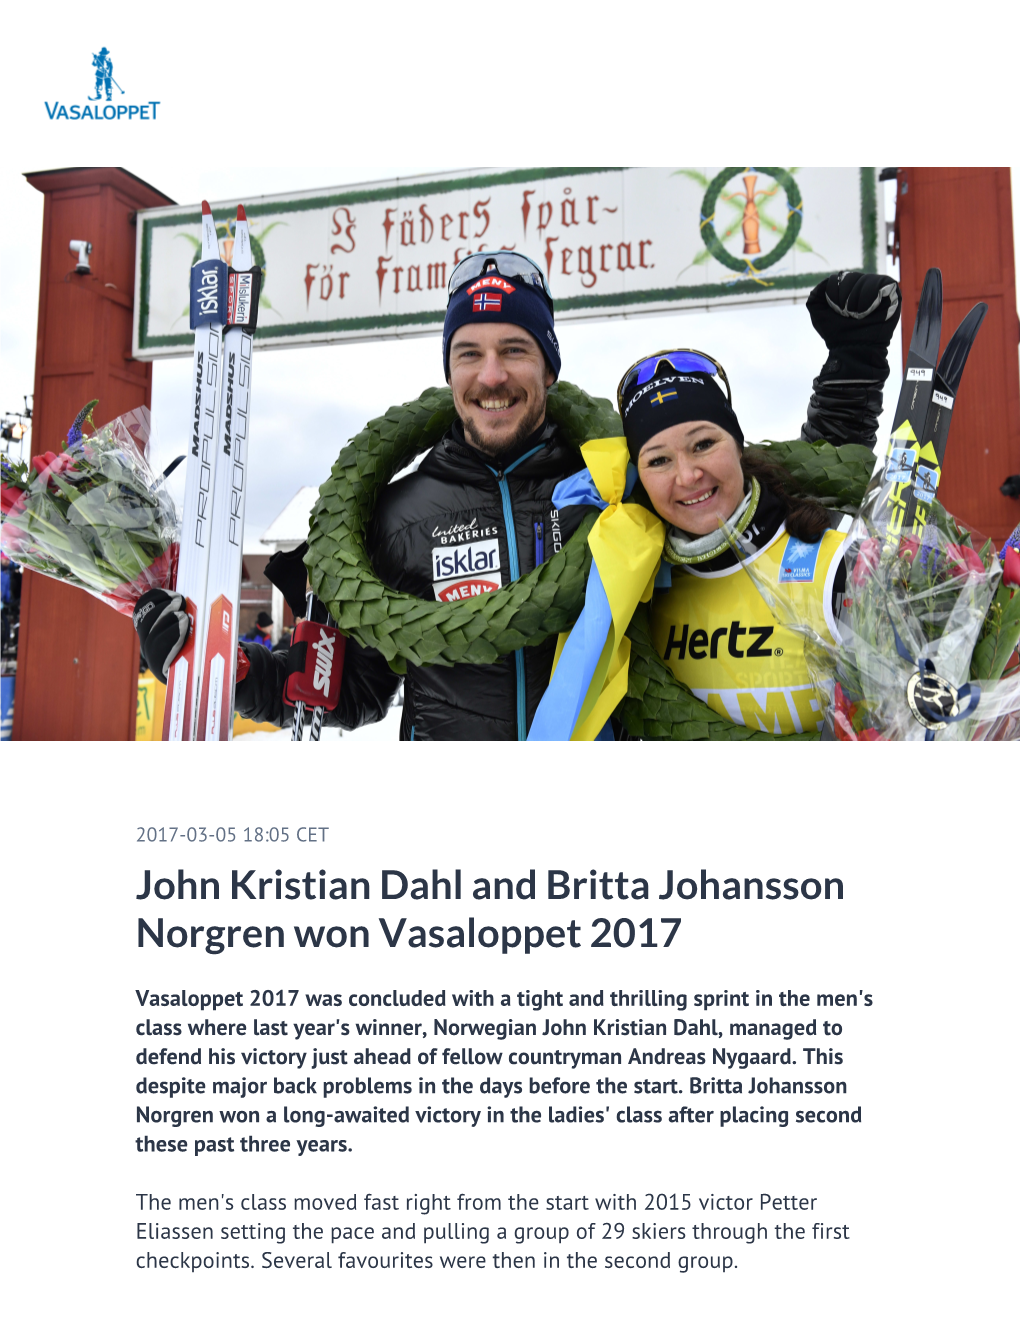 John Kristian Dahl and Britta Johansson Norgren Won Vasaloppet 2017